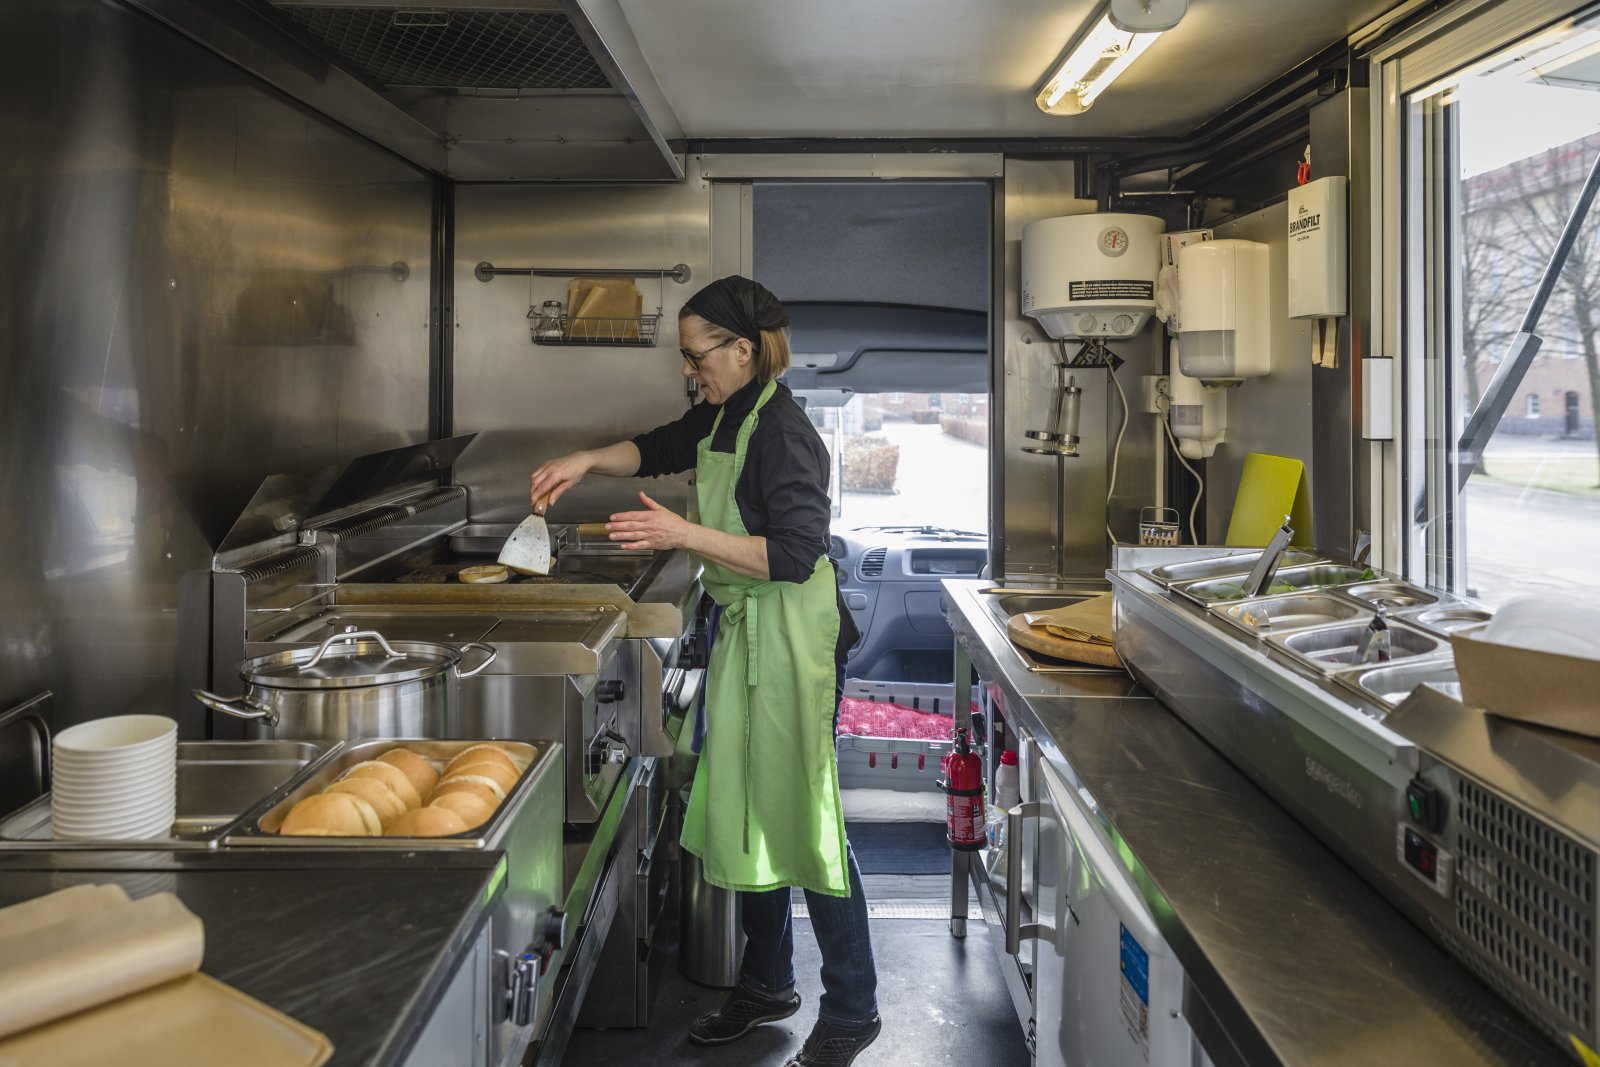 Annelie Idman, Gaston & Vega, the green food truck. © Sven Persson / swelo.se